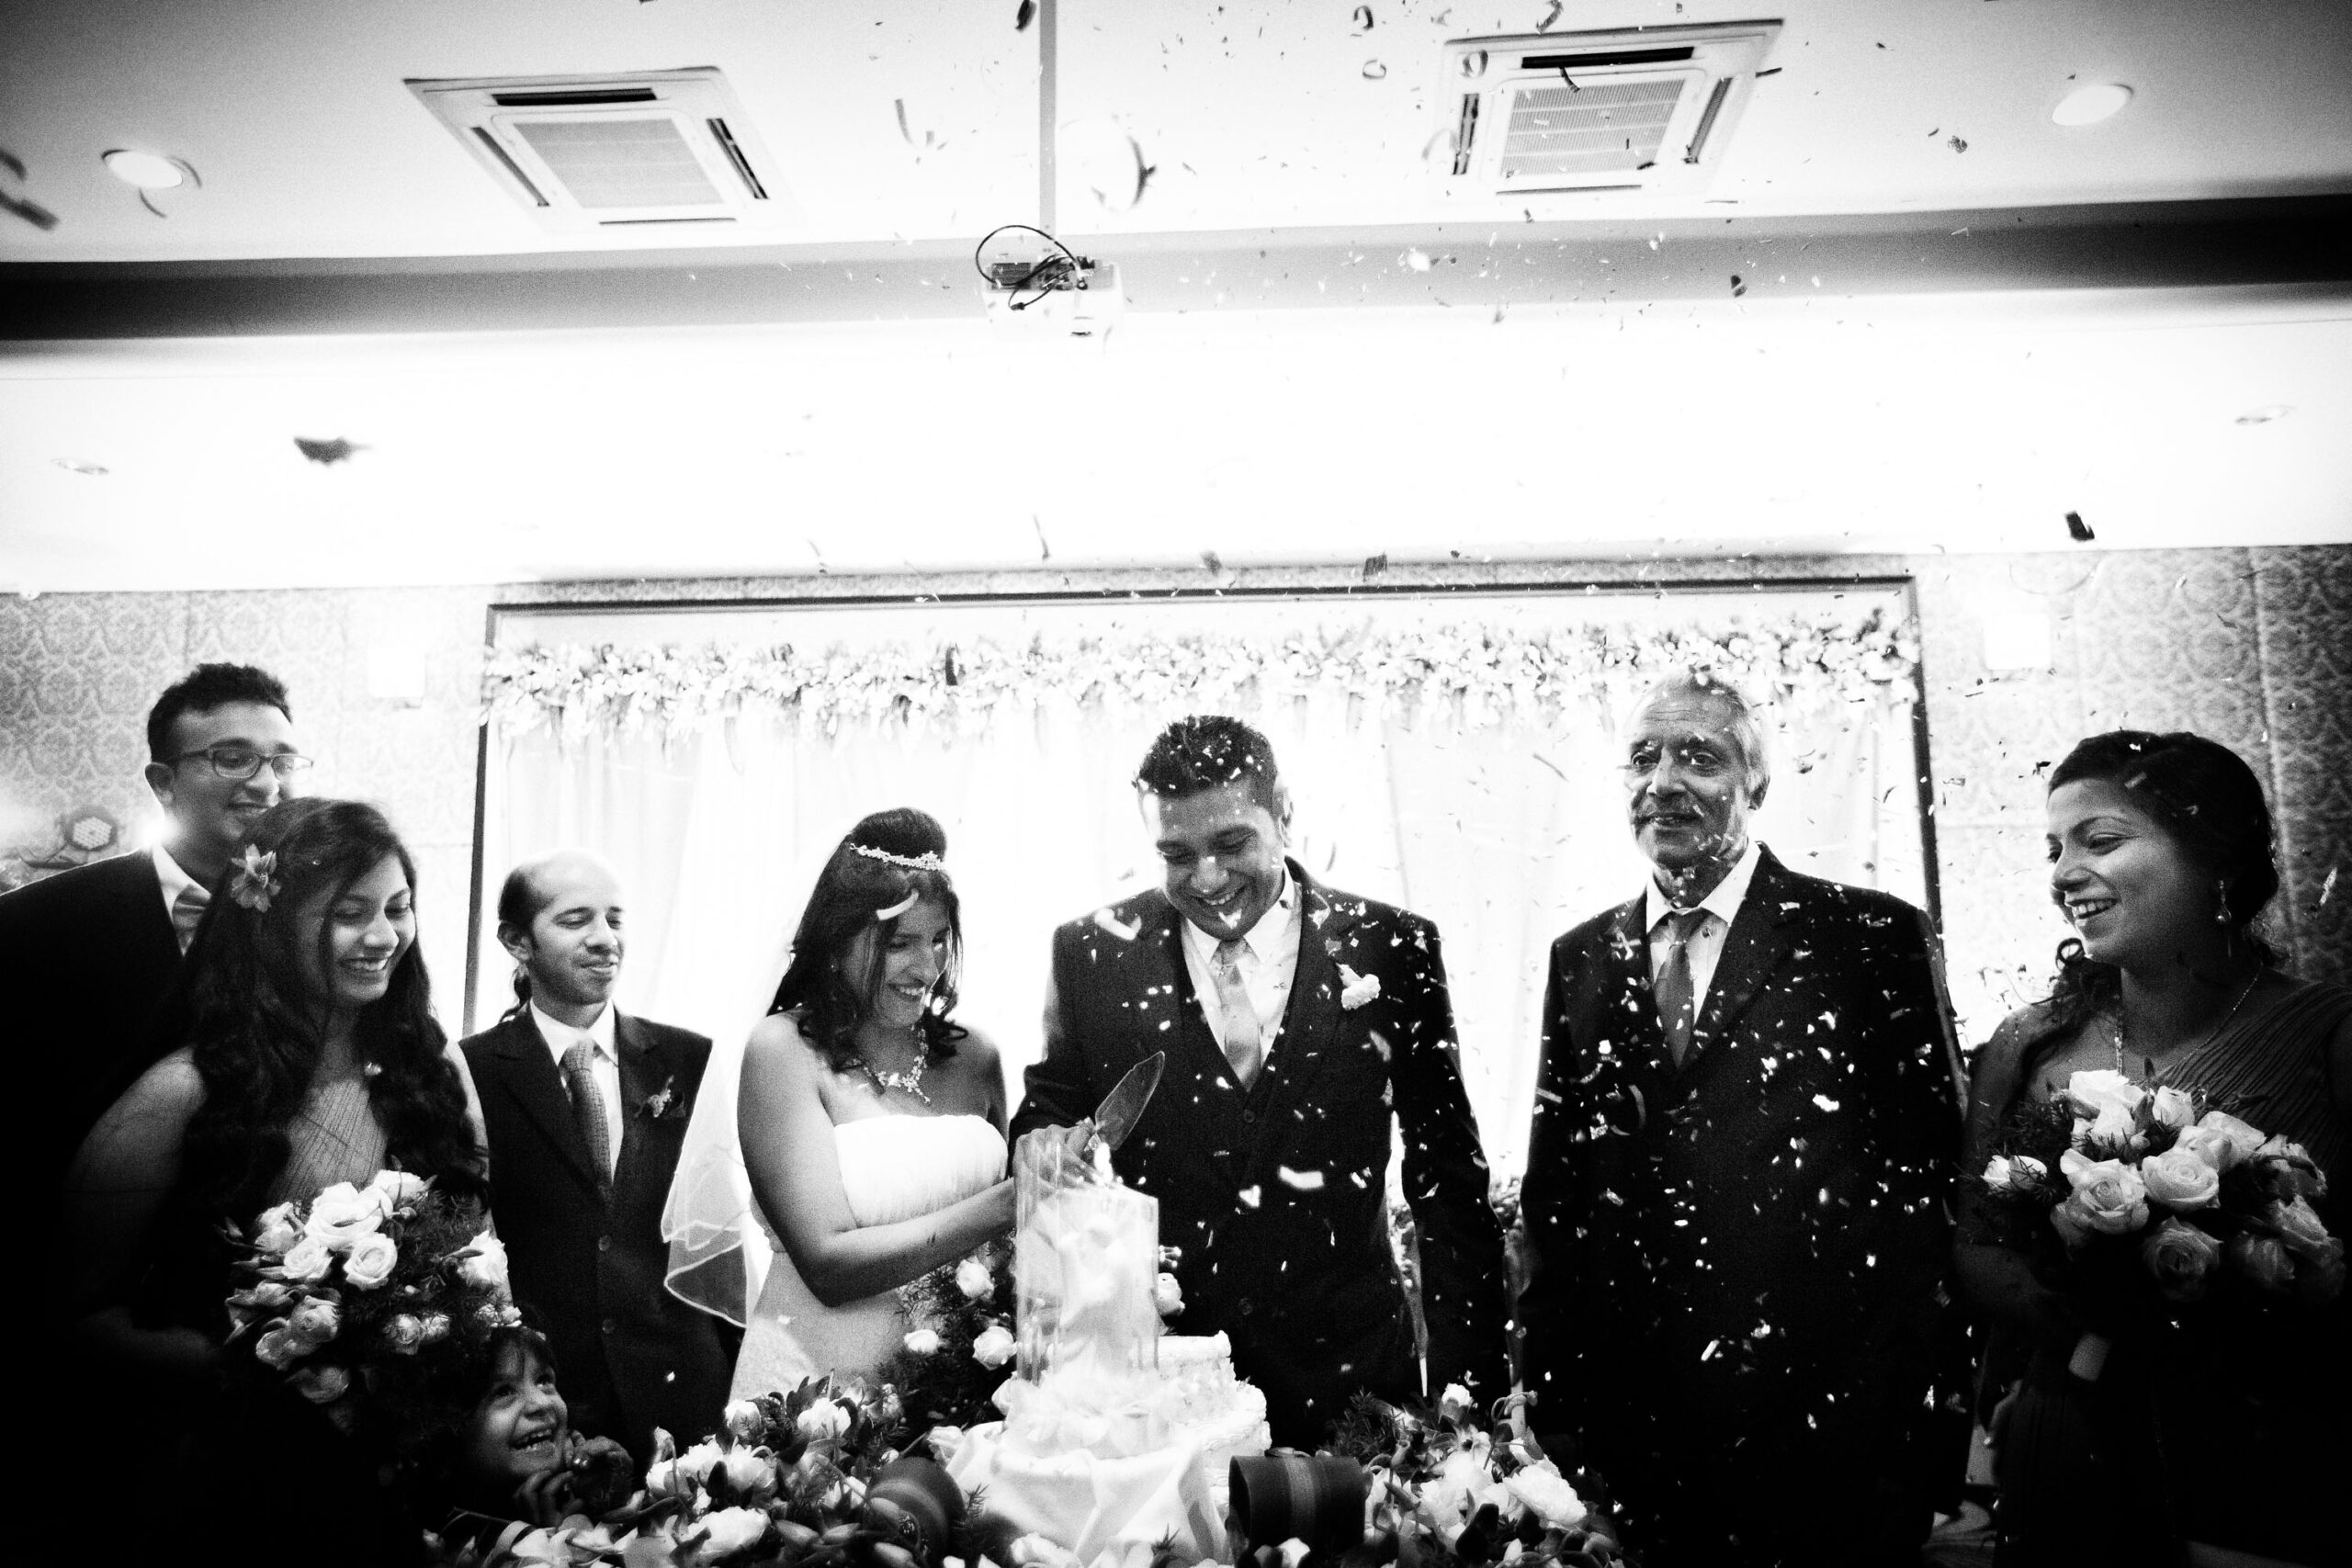 sheena leroy christian wedding photography by dropdstudio